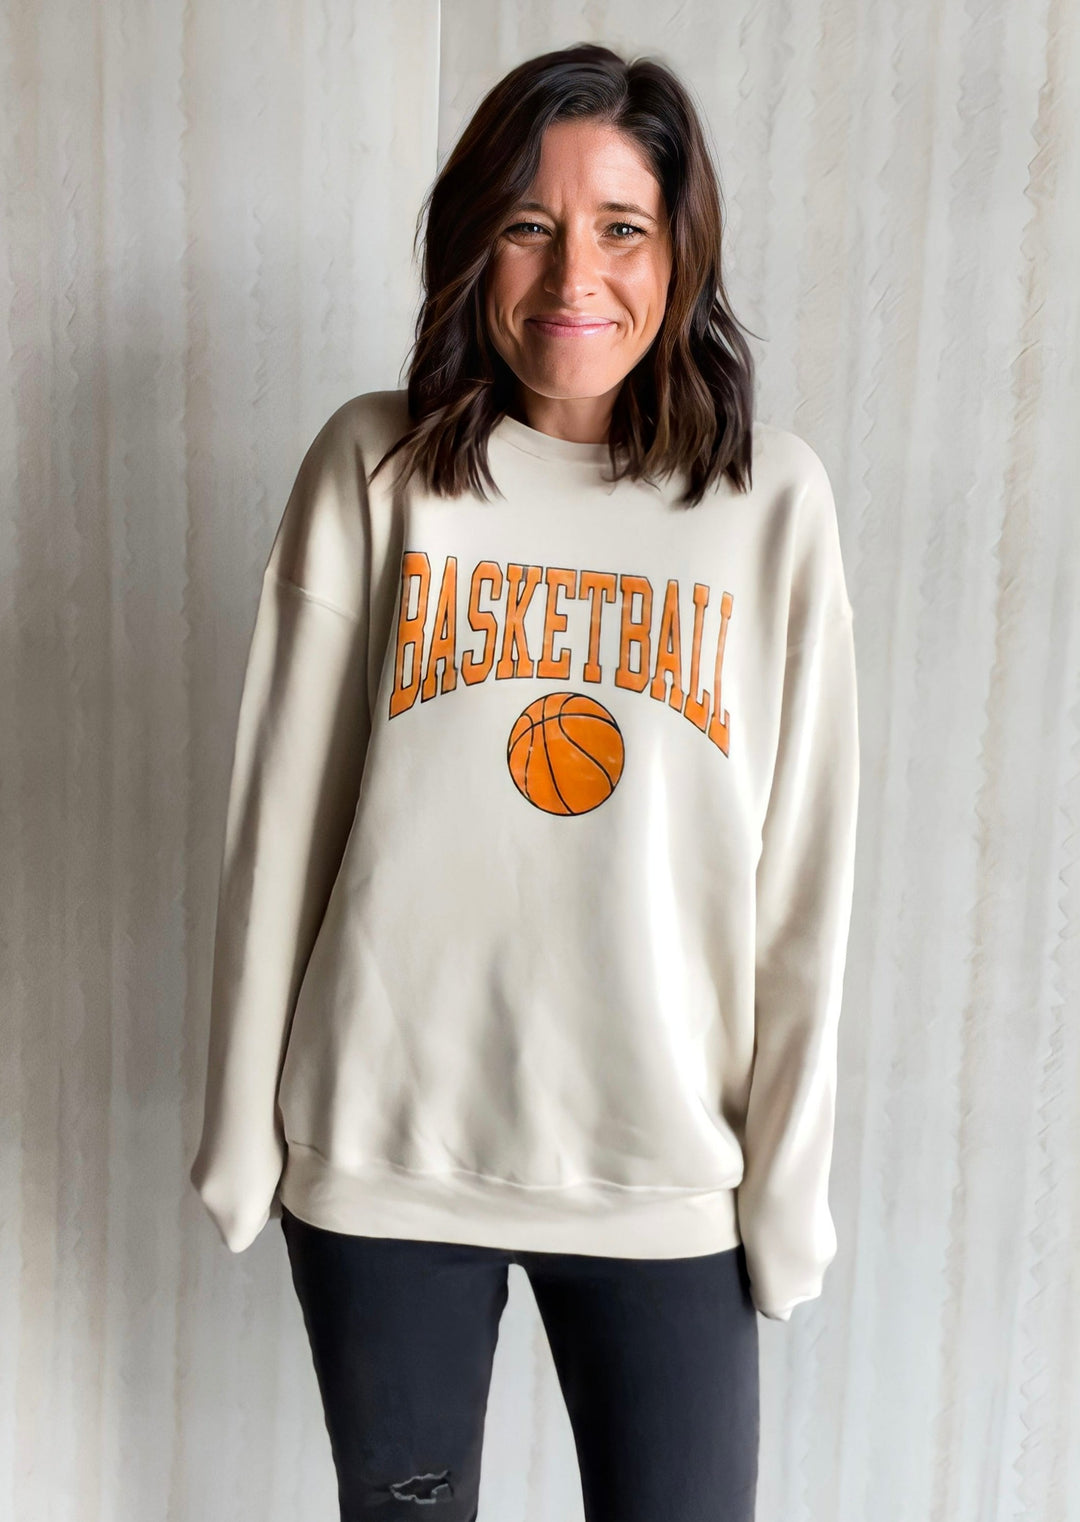 Women's Neutral Basketball Sweatshirt. Cream Sweatshirt with Basketball text and grahic in light orange. Sweatshirt from Champaign-Urbana, Illinois Embolden boutique.